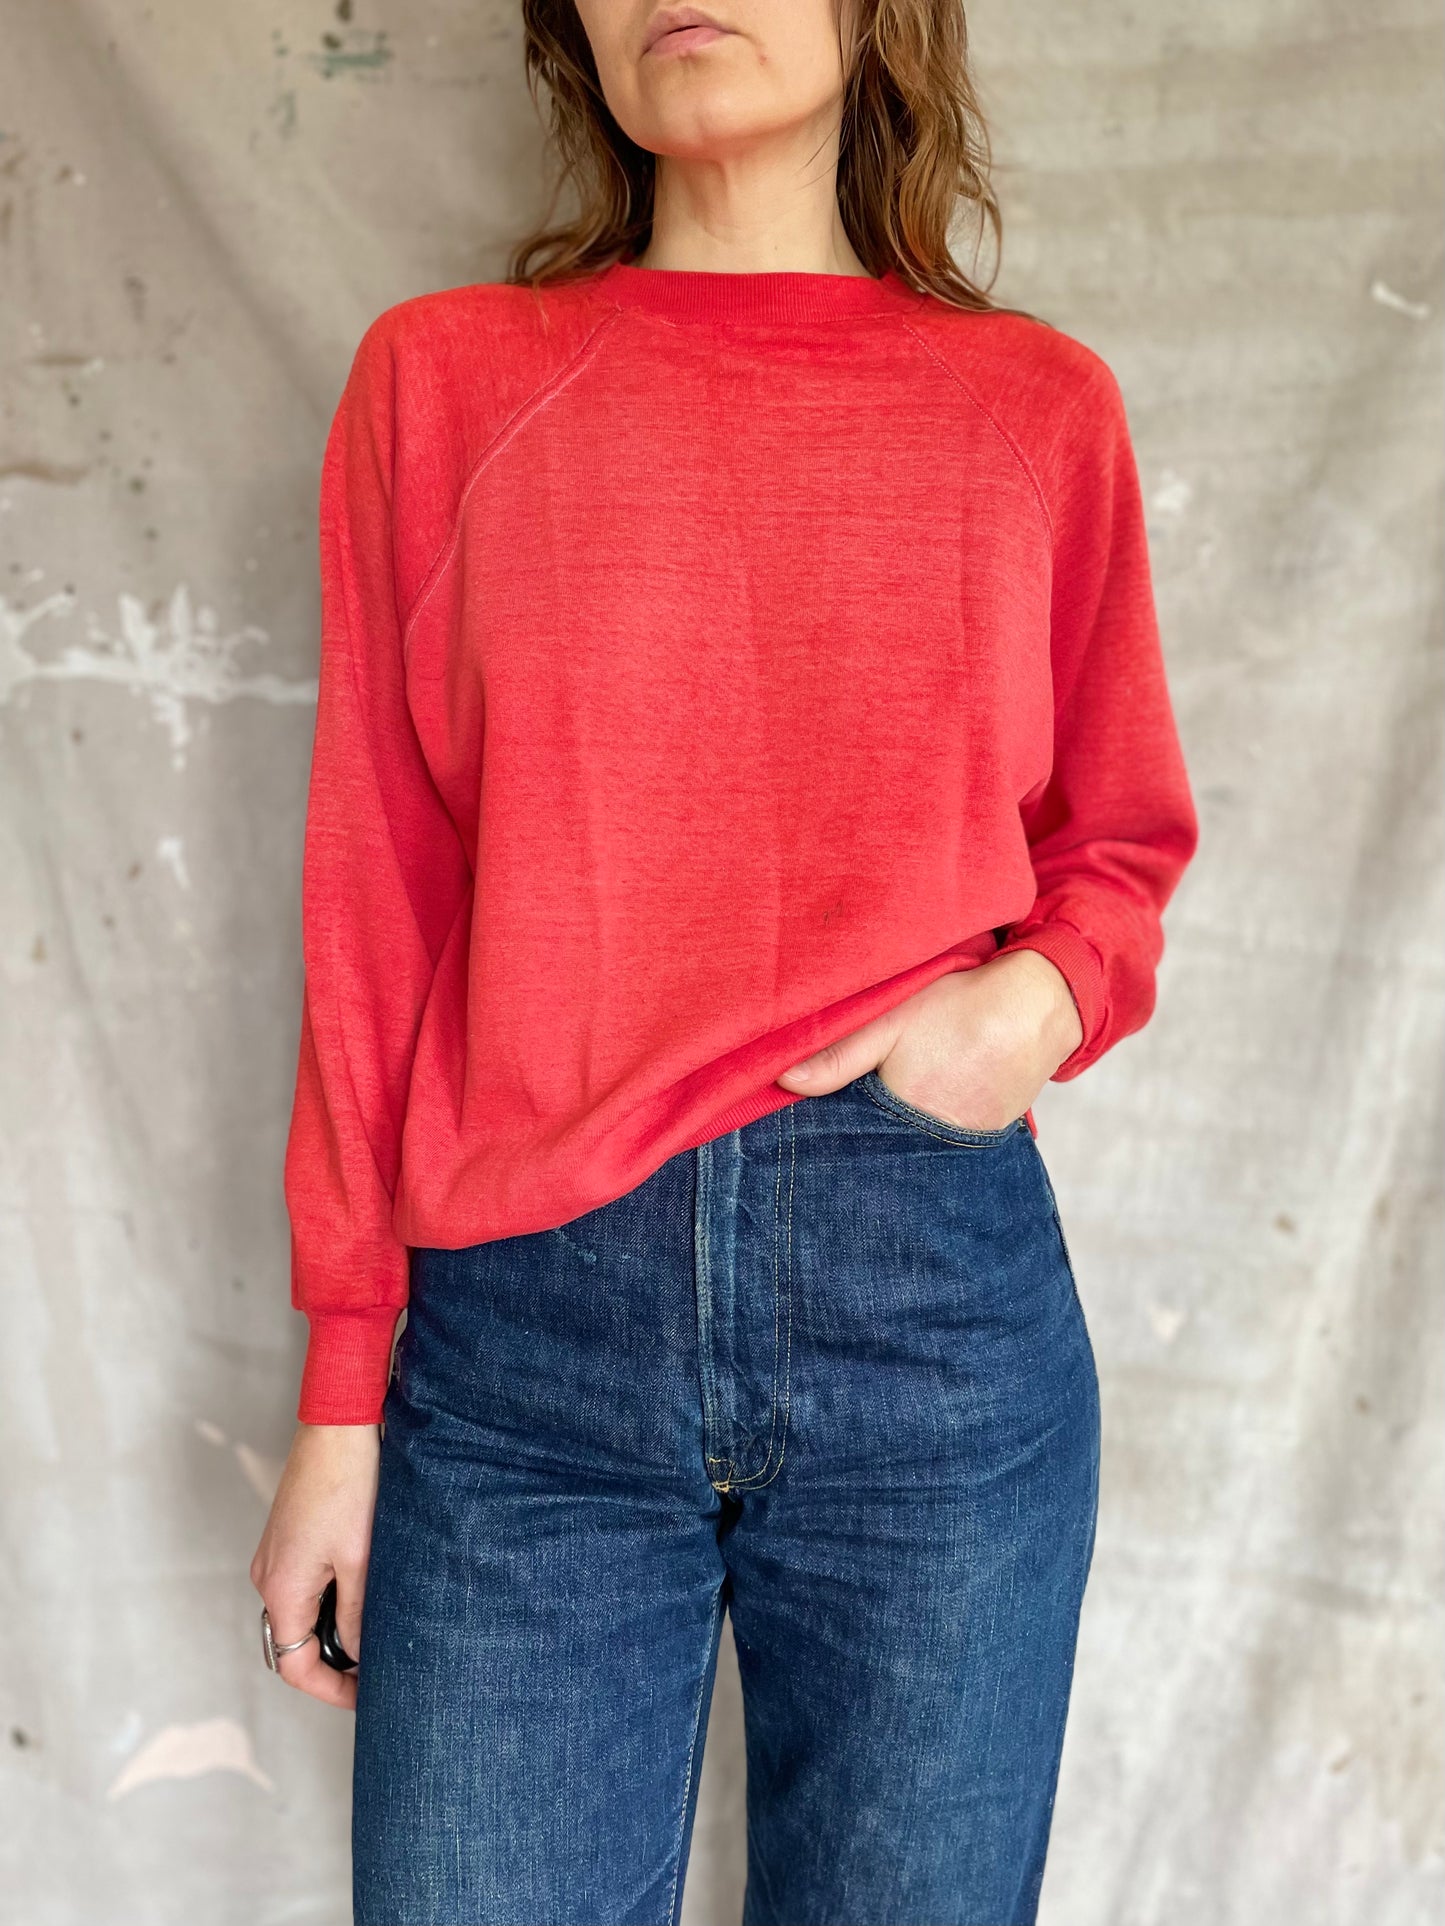 70s Blank Bright Red Sweatshirt